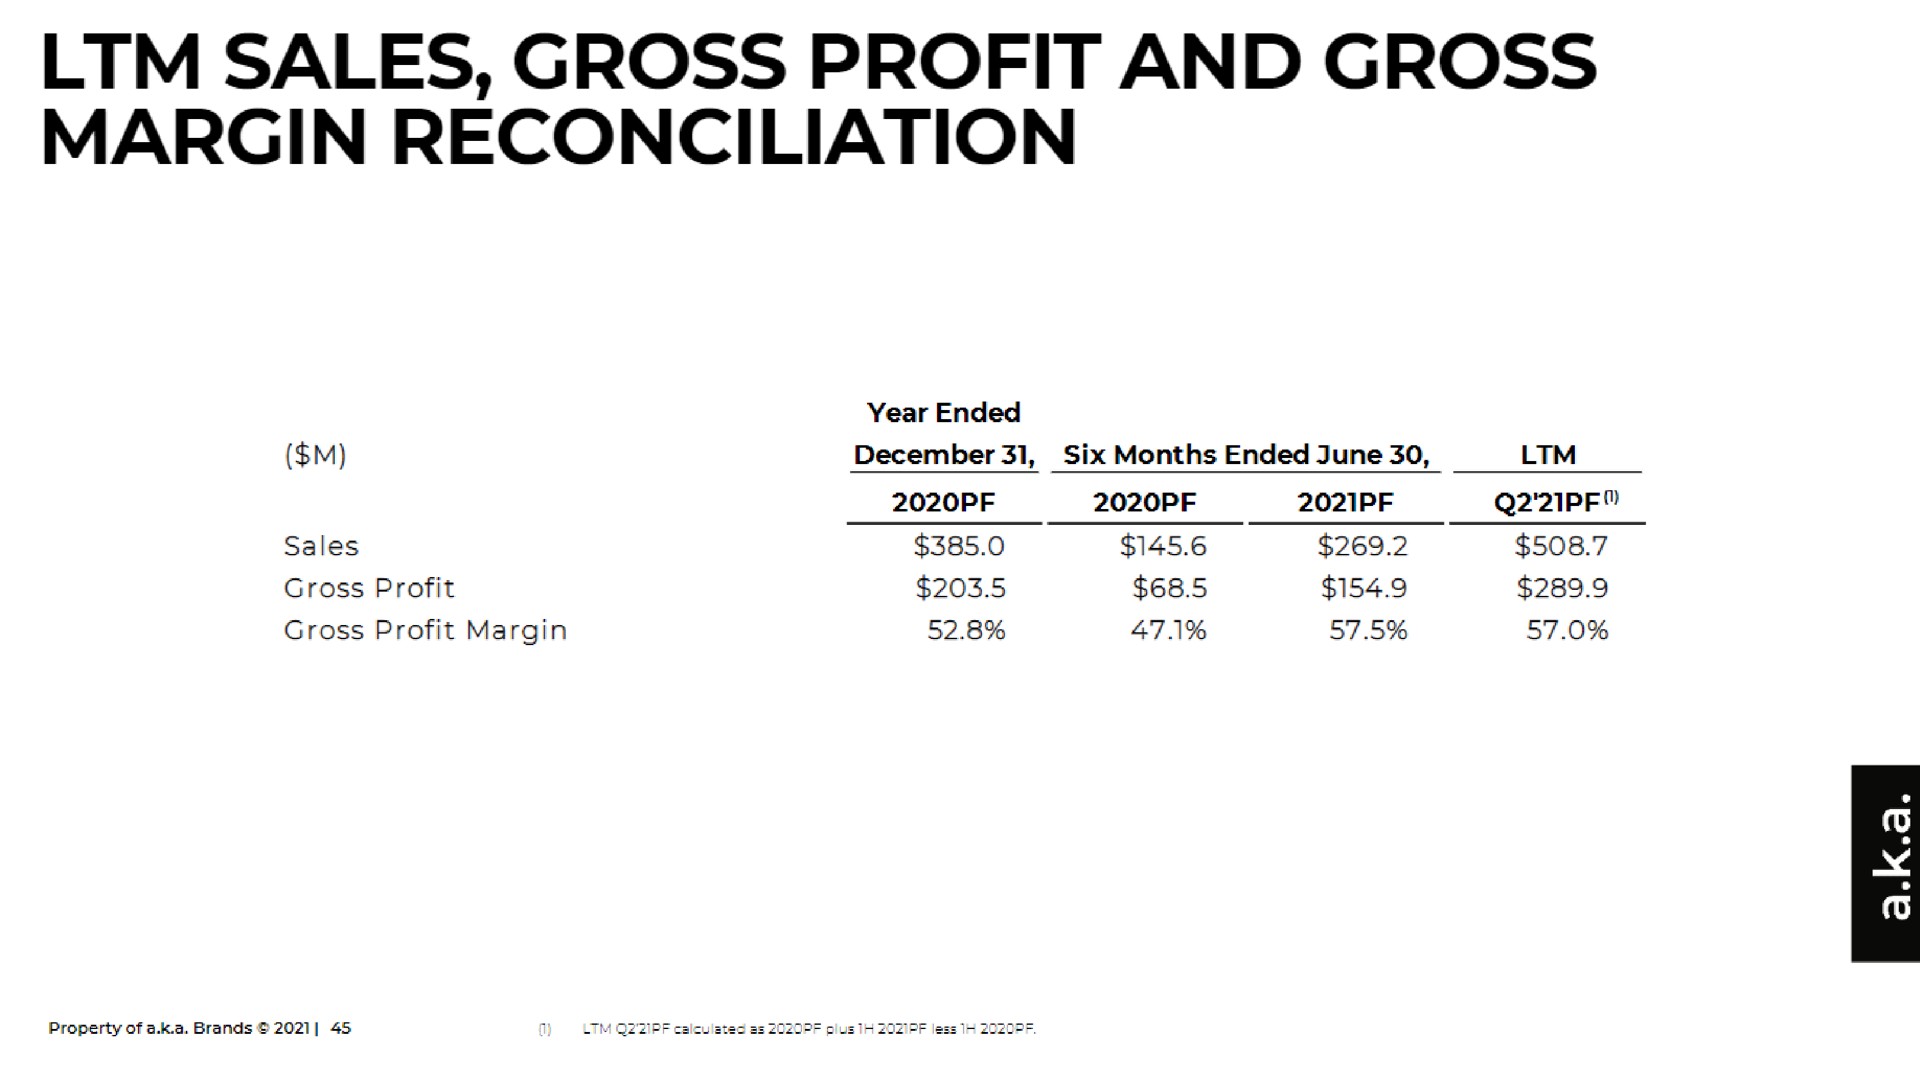 sales gross profit and gross margin reconciliation | a.k.a. Brands